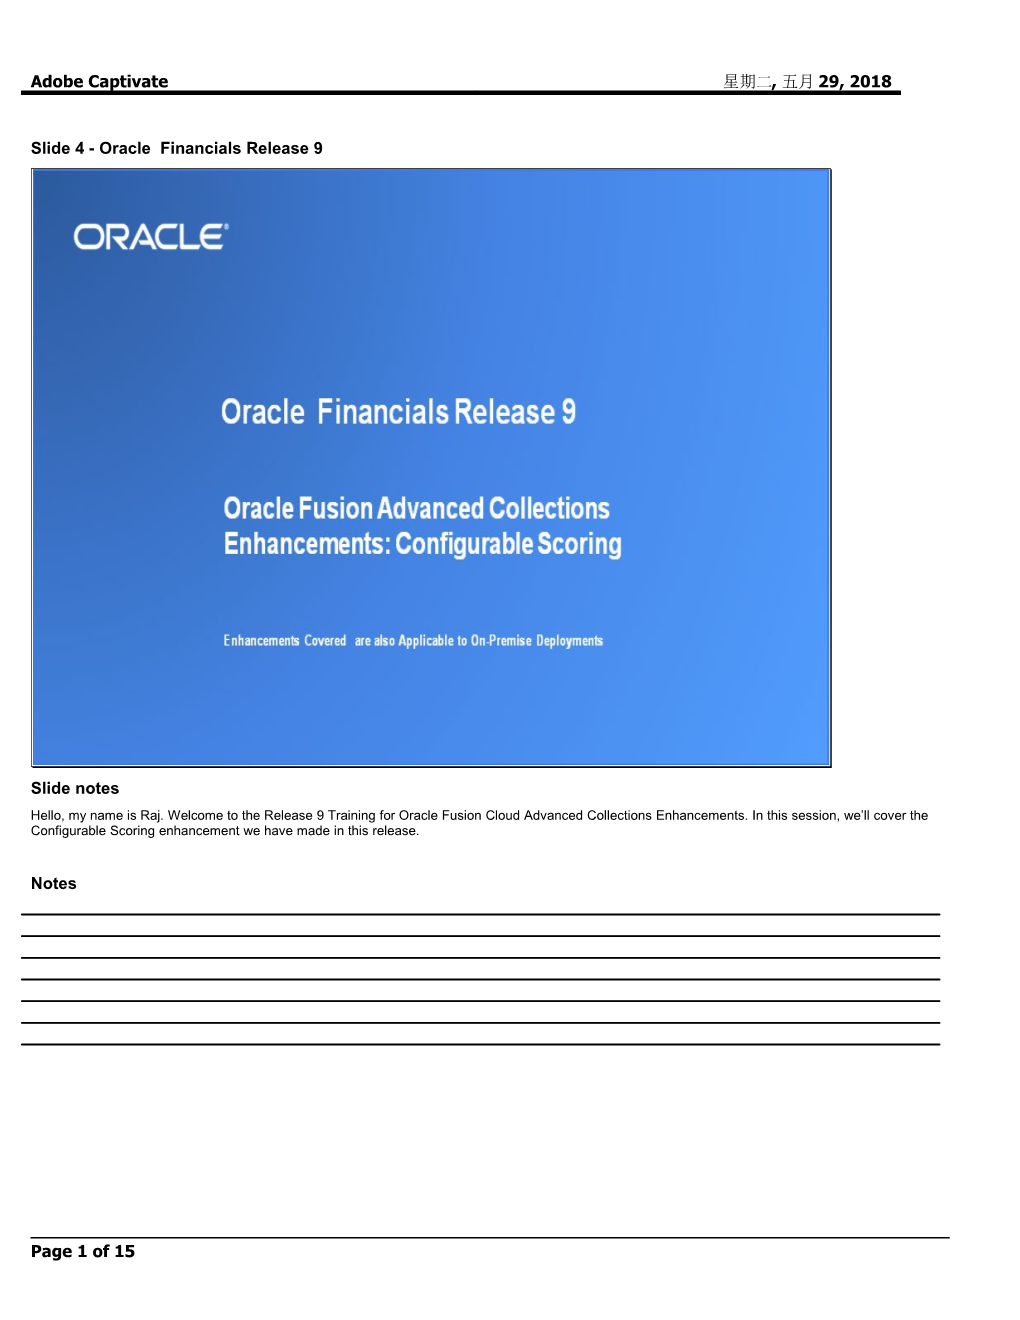 Slide 4 - Oracle Financials Release 9